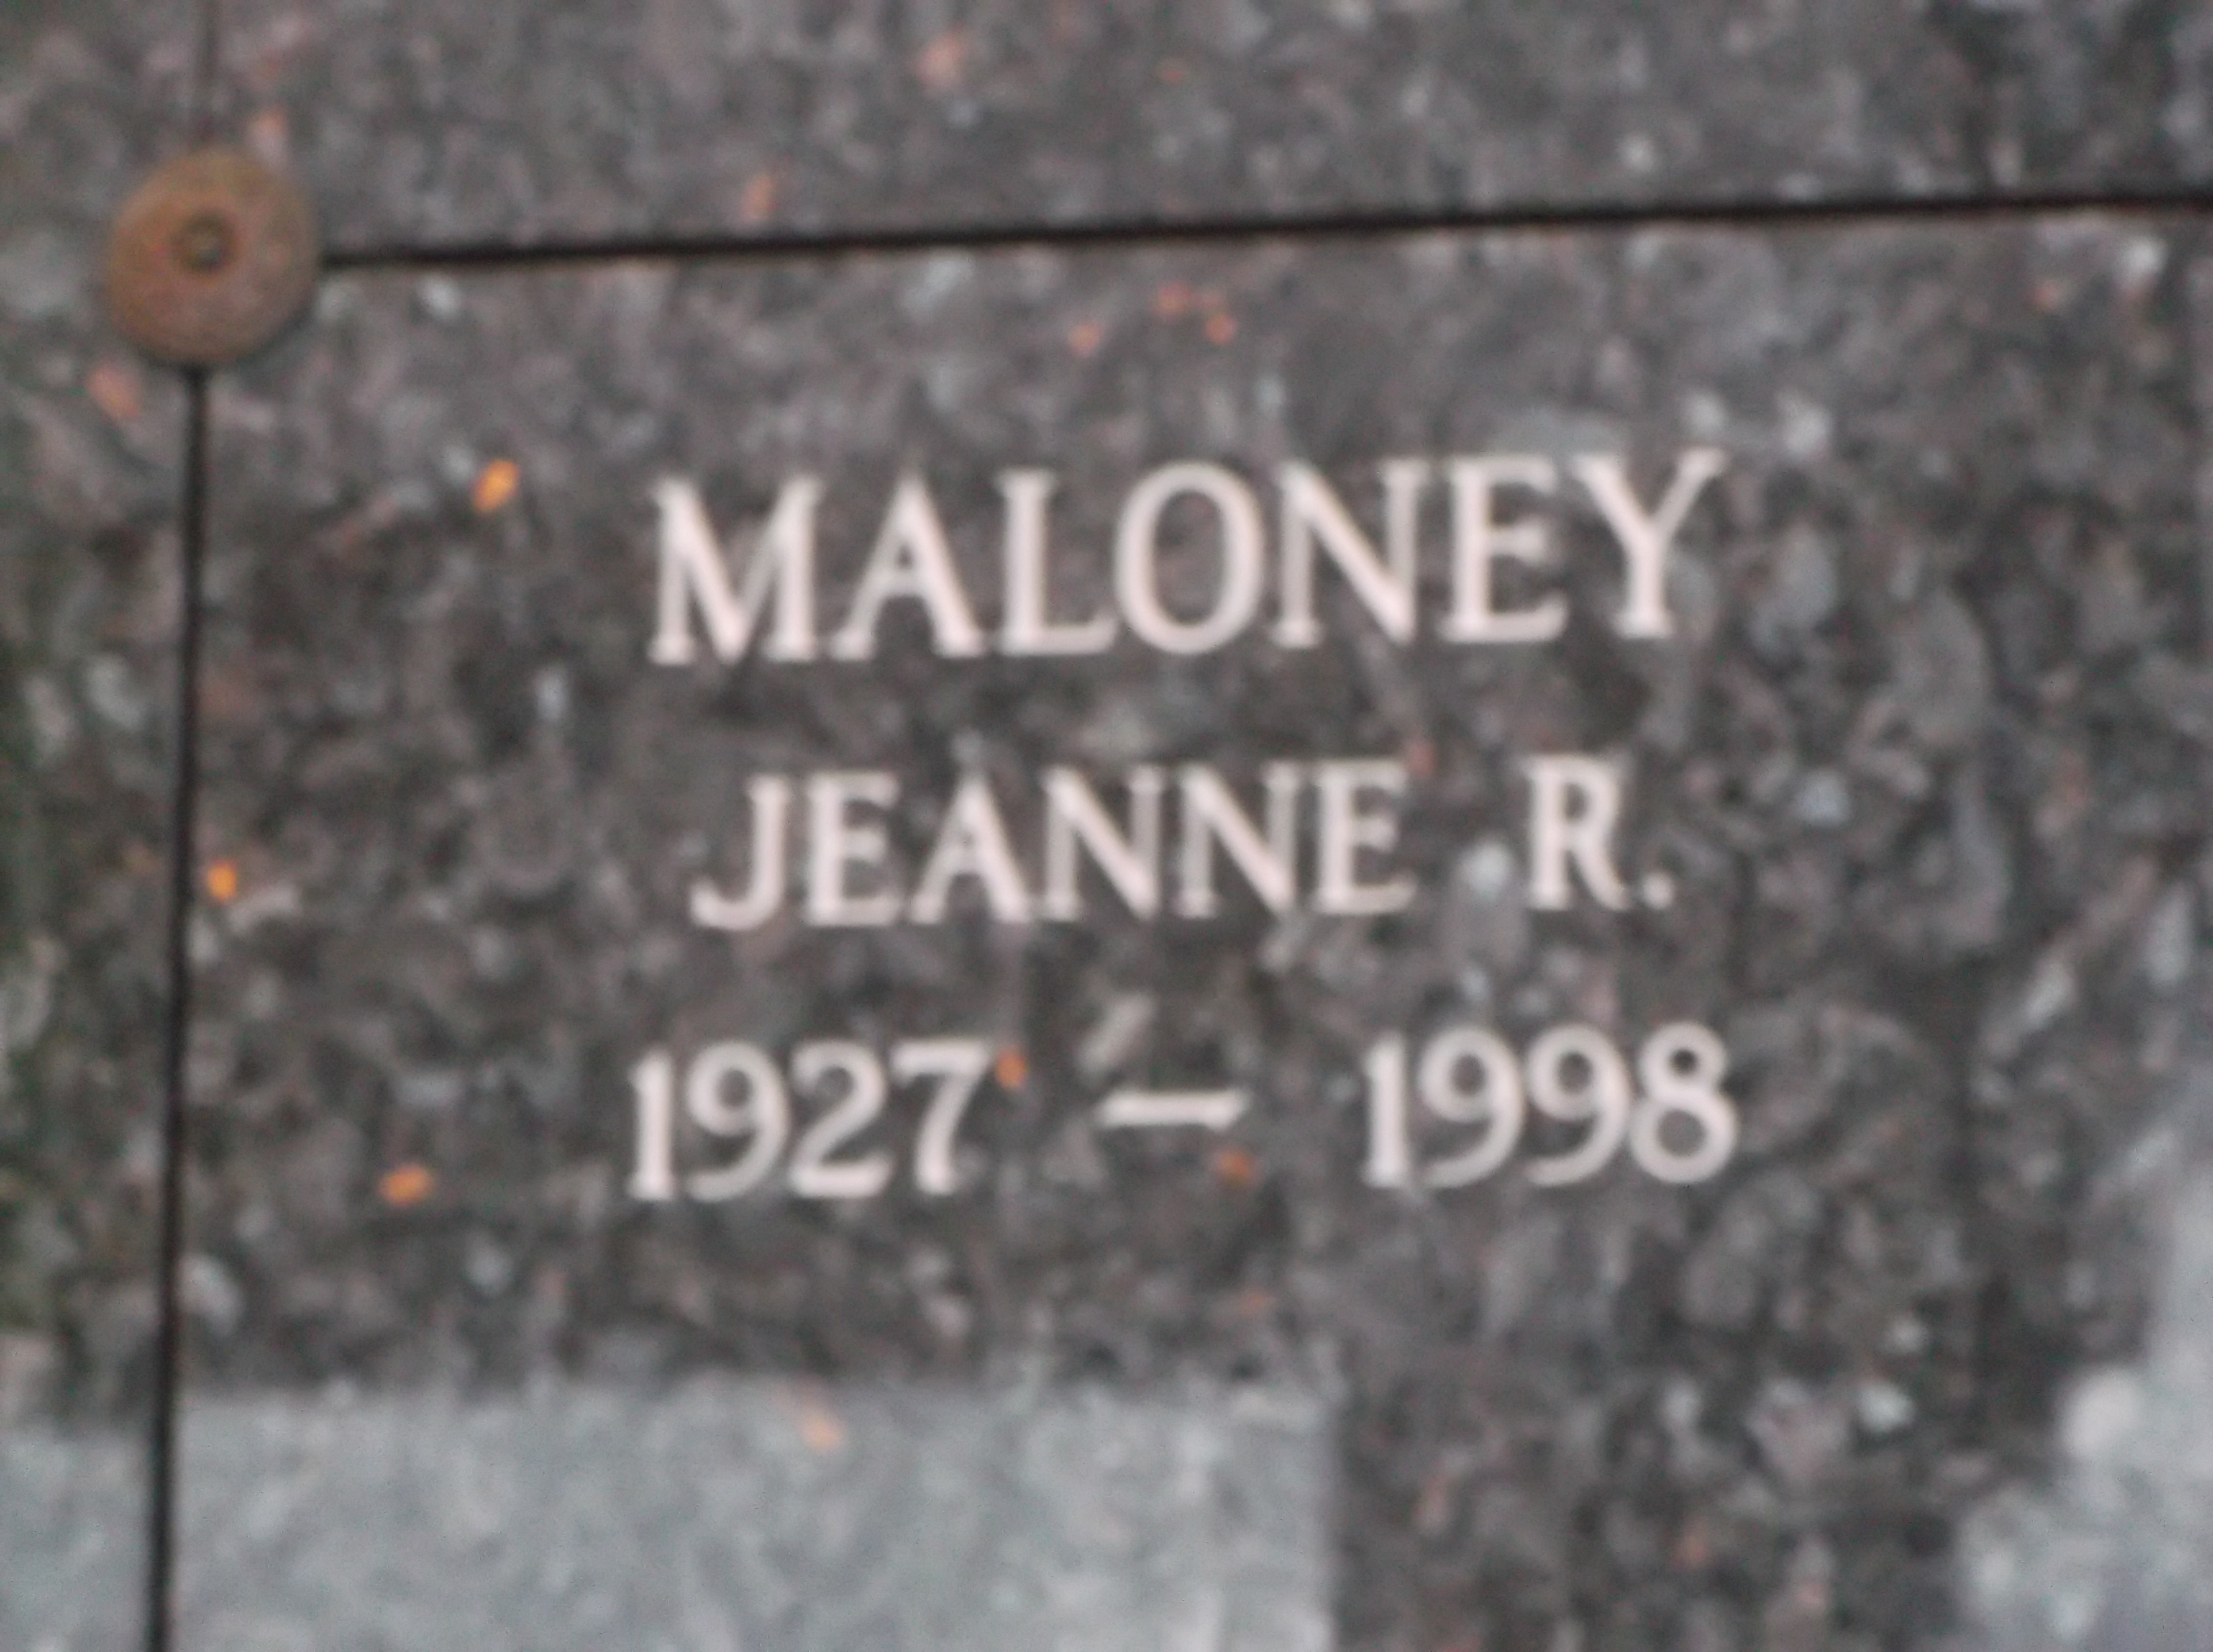 Jeanne R Maloney